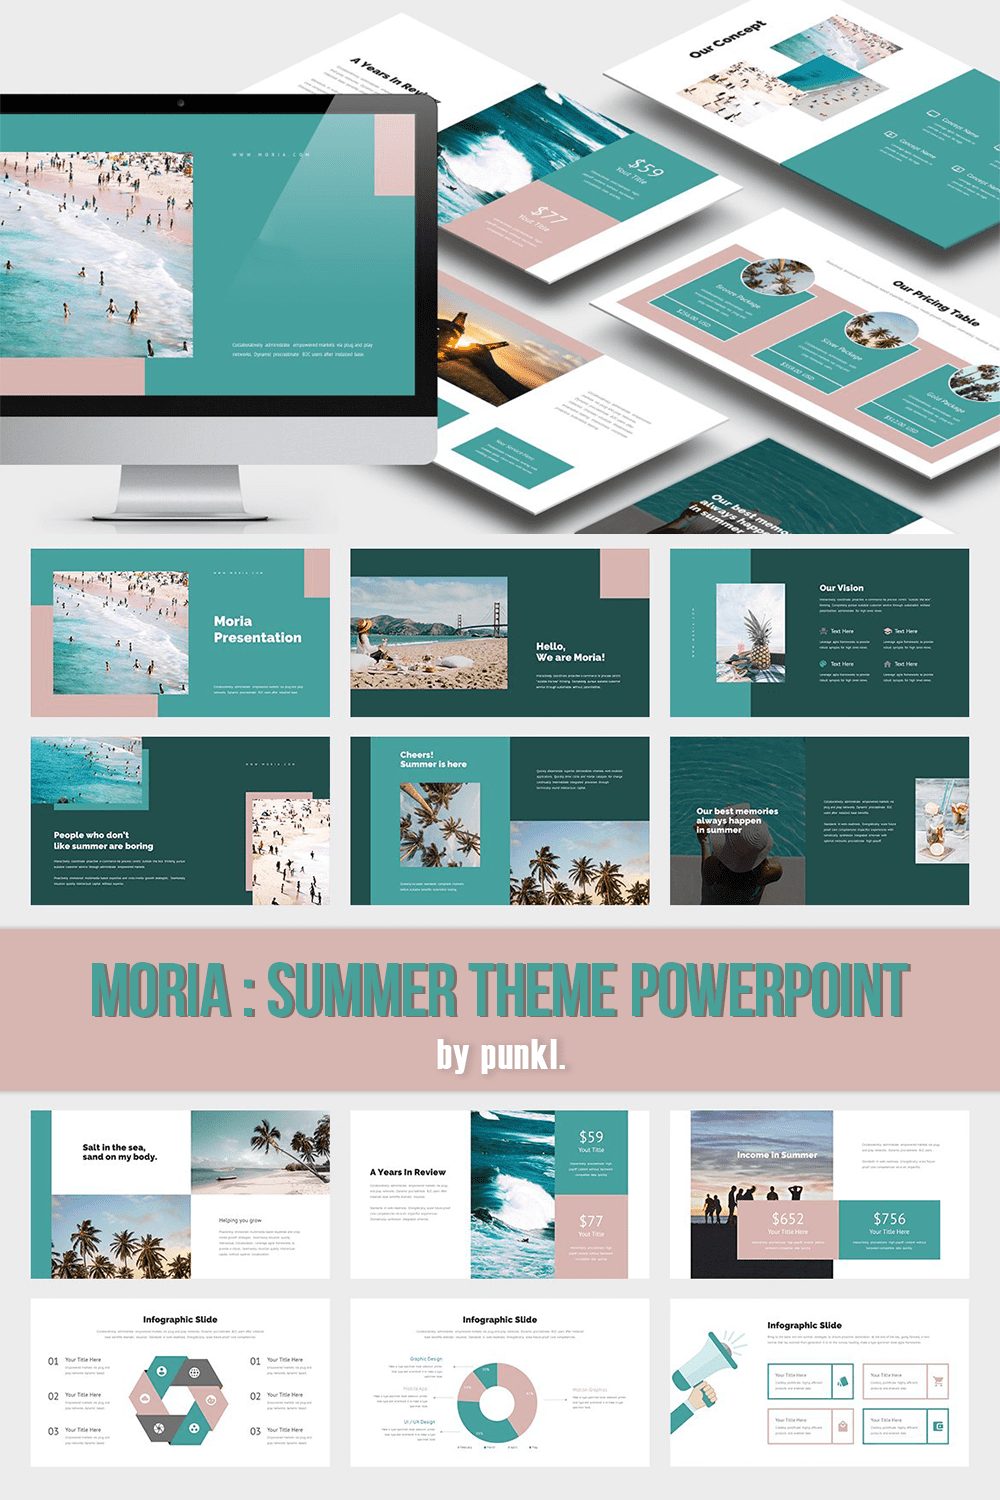 Moria: Summer Theme PowerPoint pinterest image.